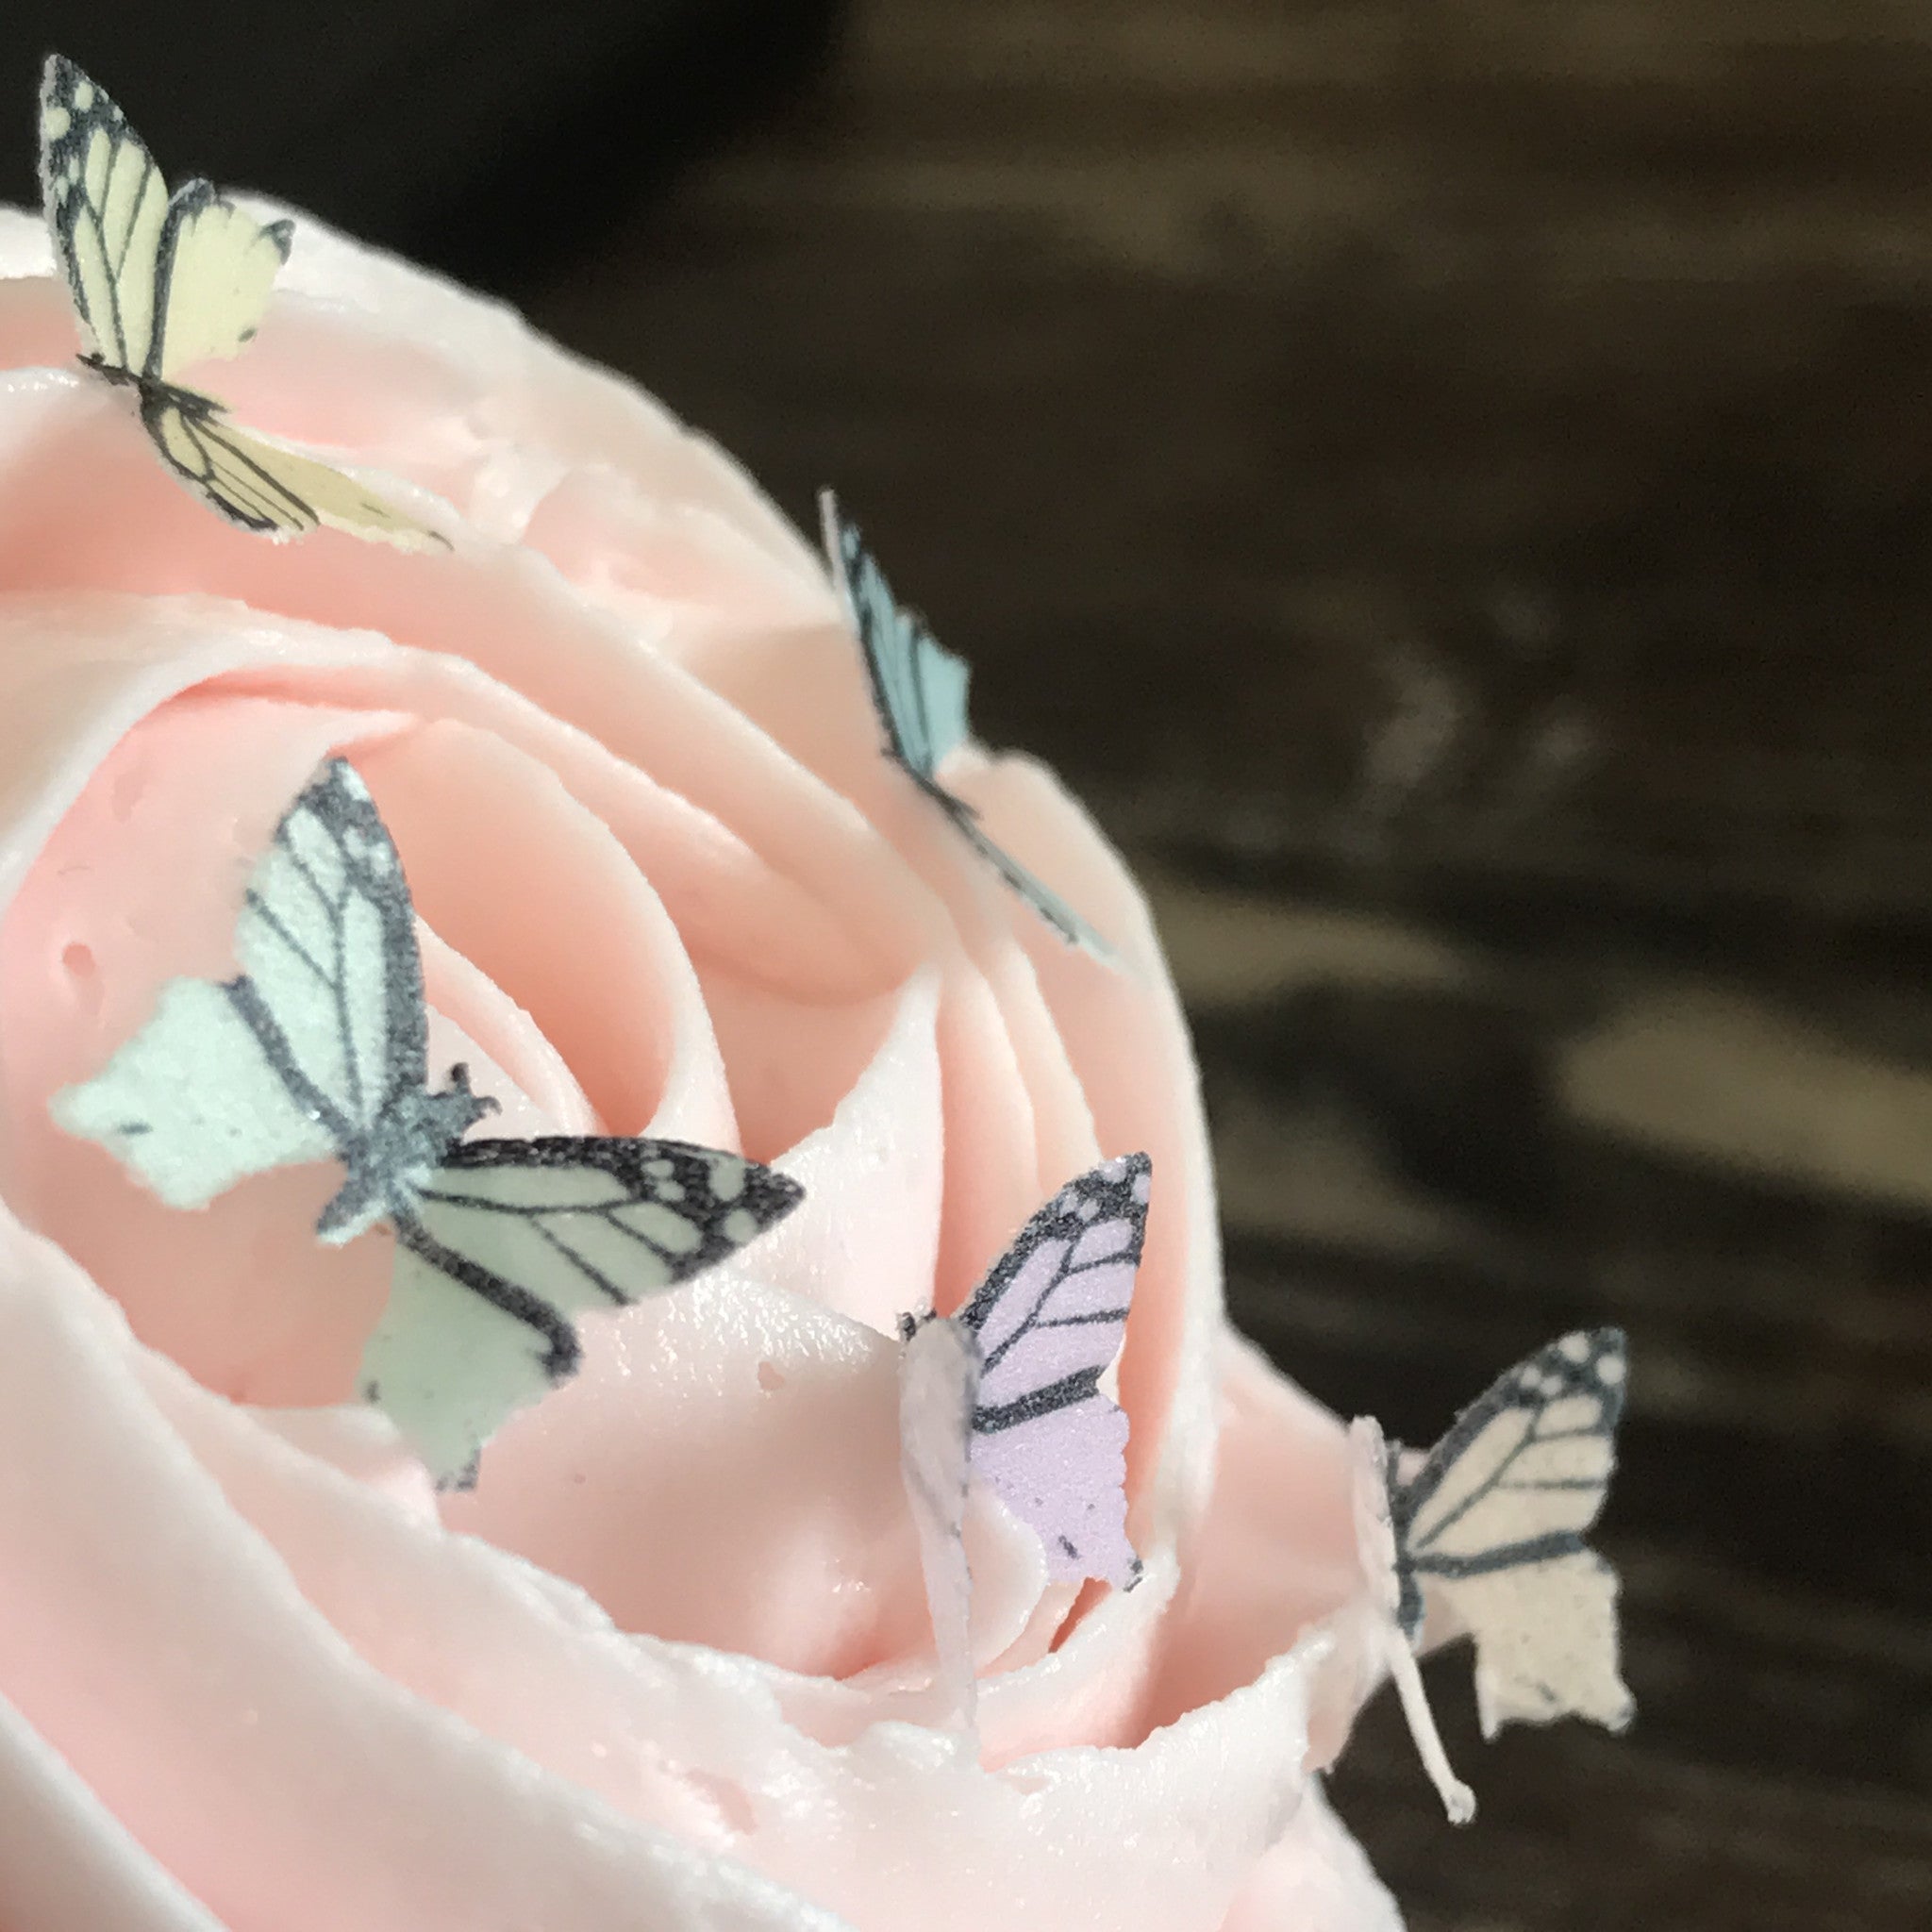 Edible Pastel Miniature Butterflies on Wafer Paper